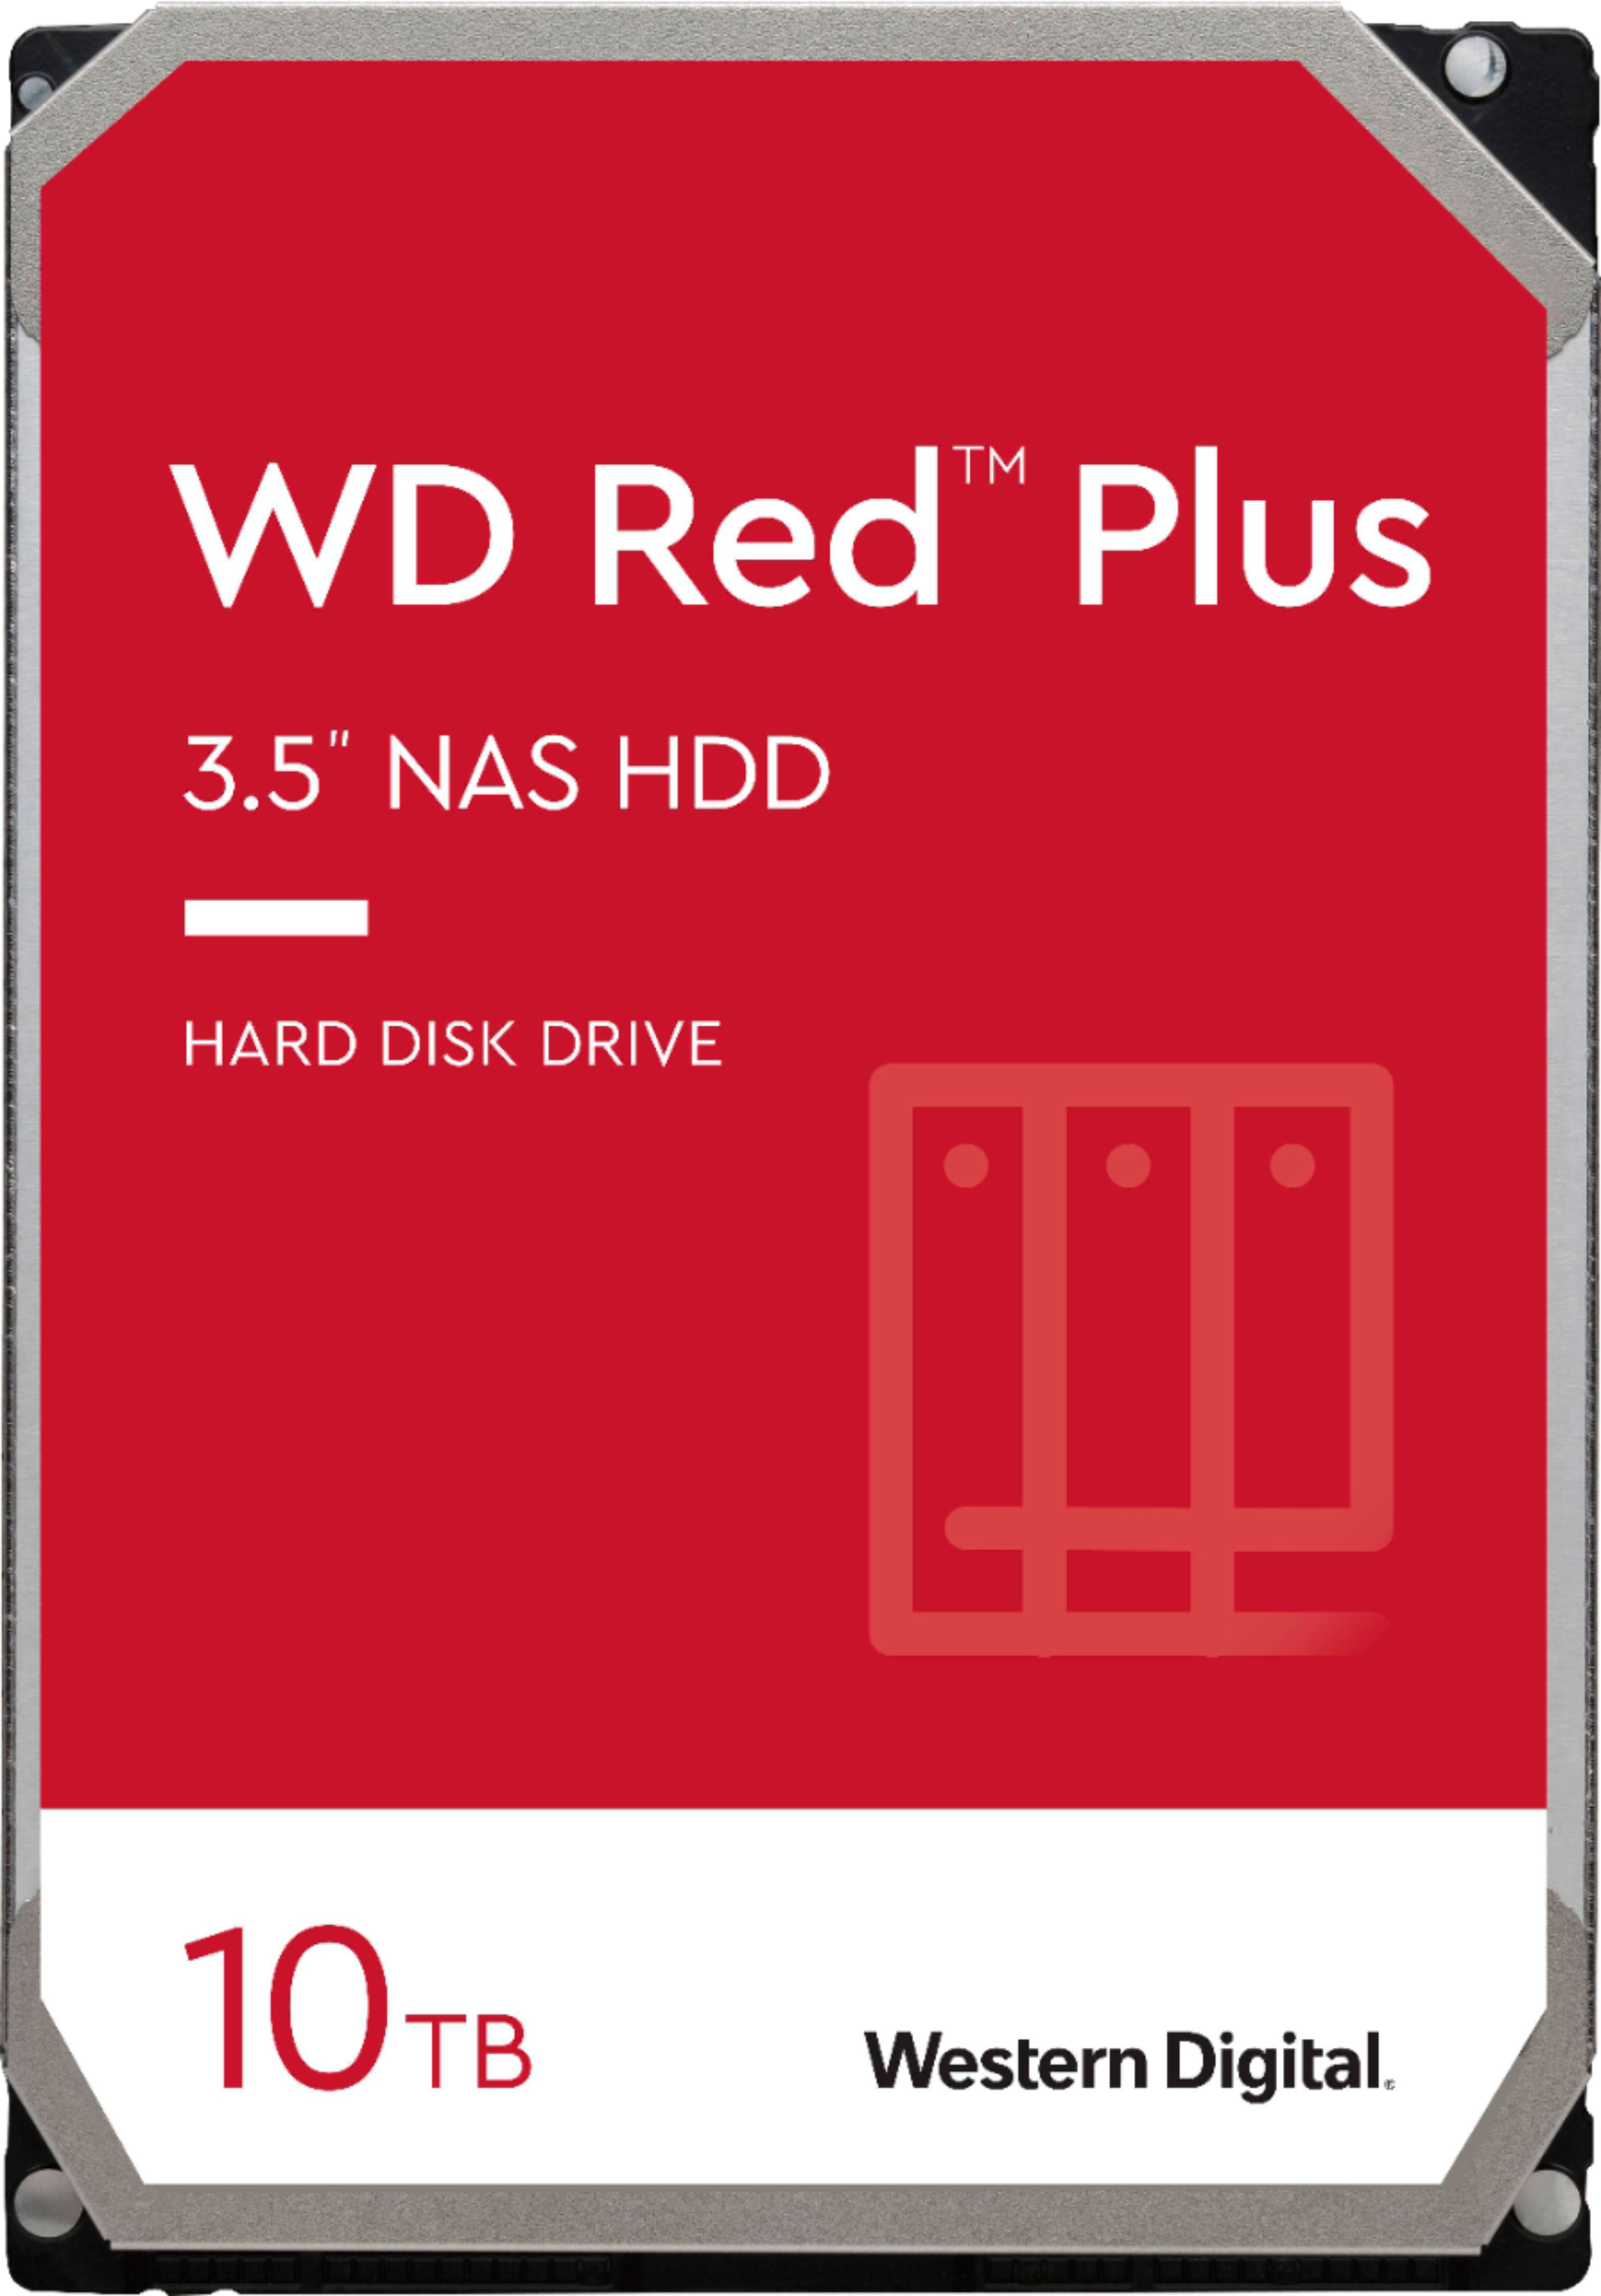 WD - Red Plus 10TB Internal SATA NAS Hard Drive for Desktops